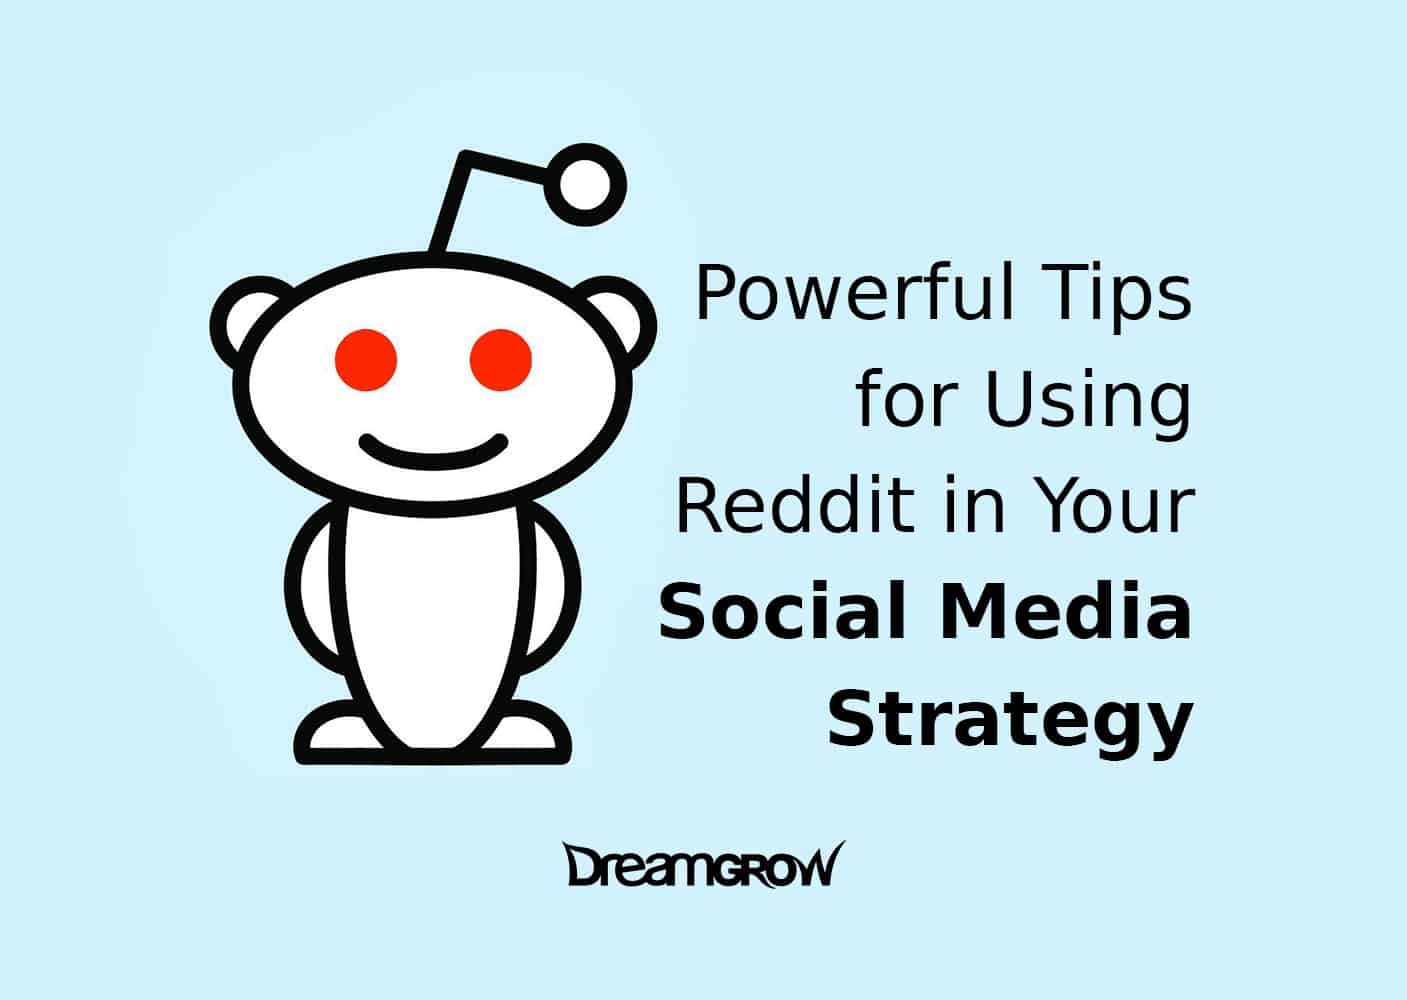 Reddit Marketing 101: How to Successfully Market on Reddit